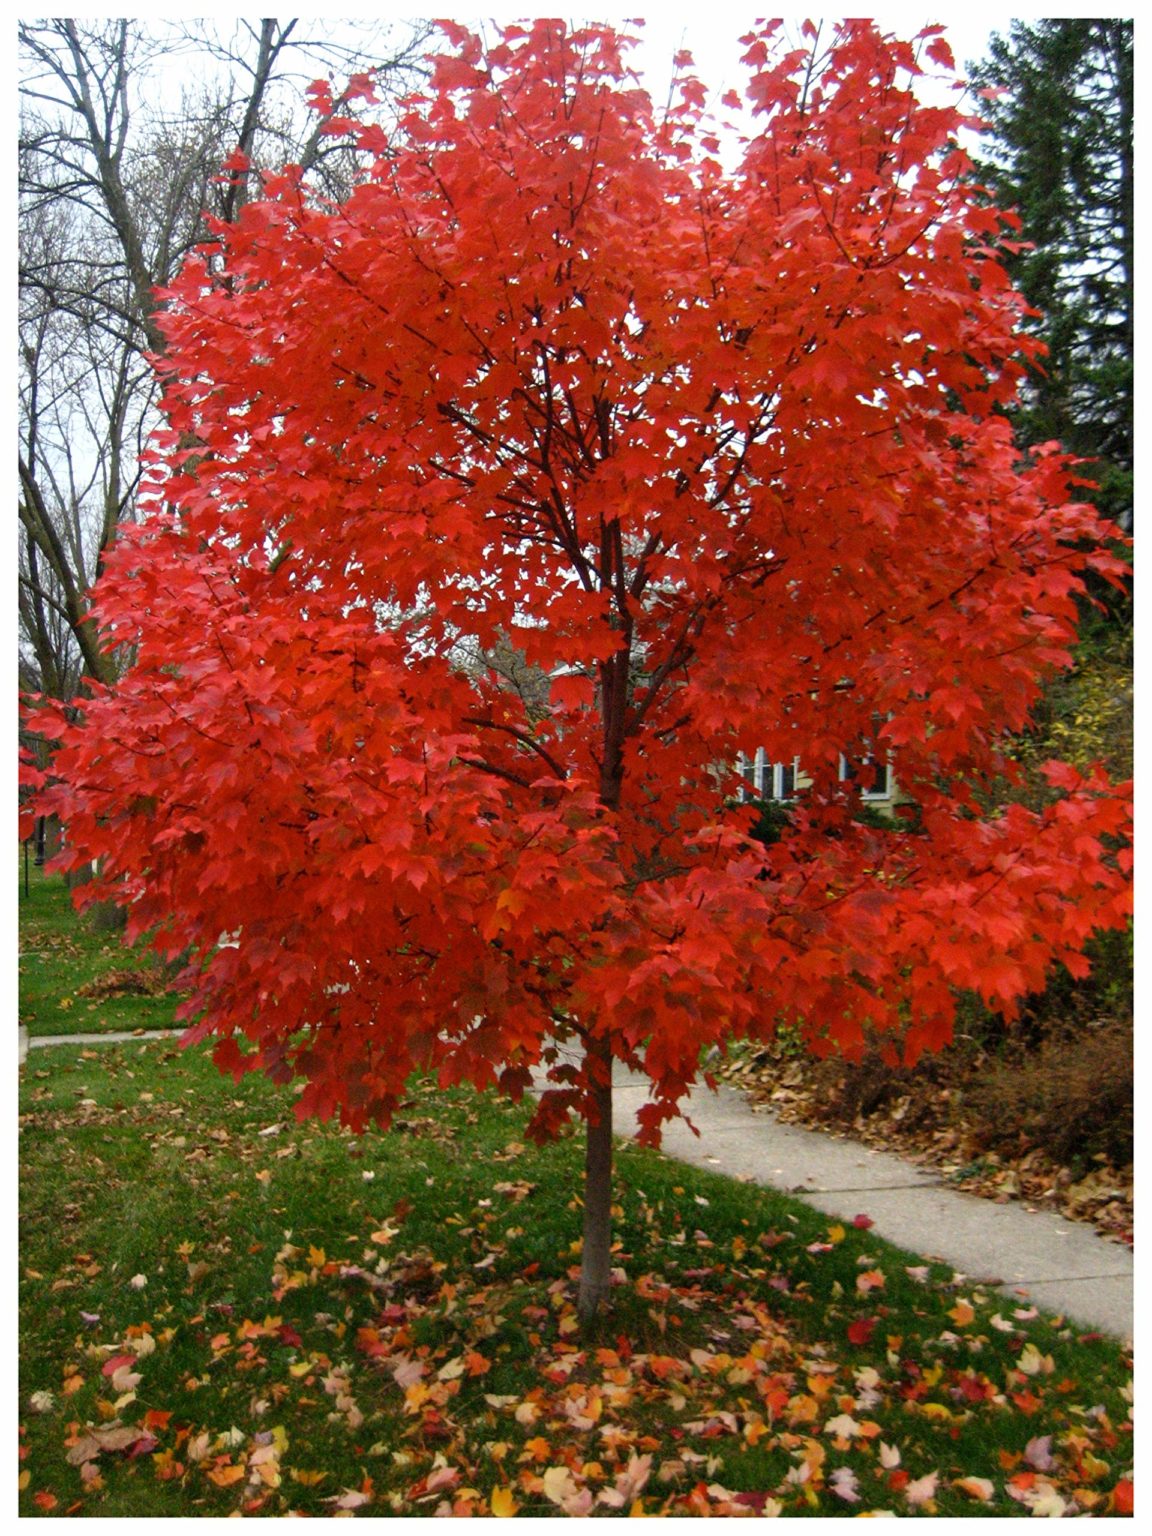 Autumn Blaze Red Maple Tree - Acer saccharinum - Heavy Established